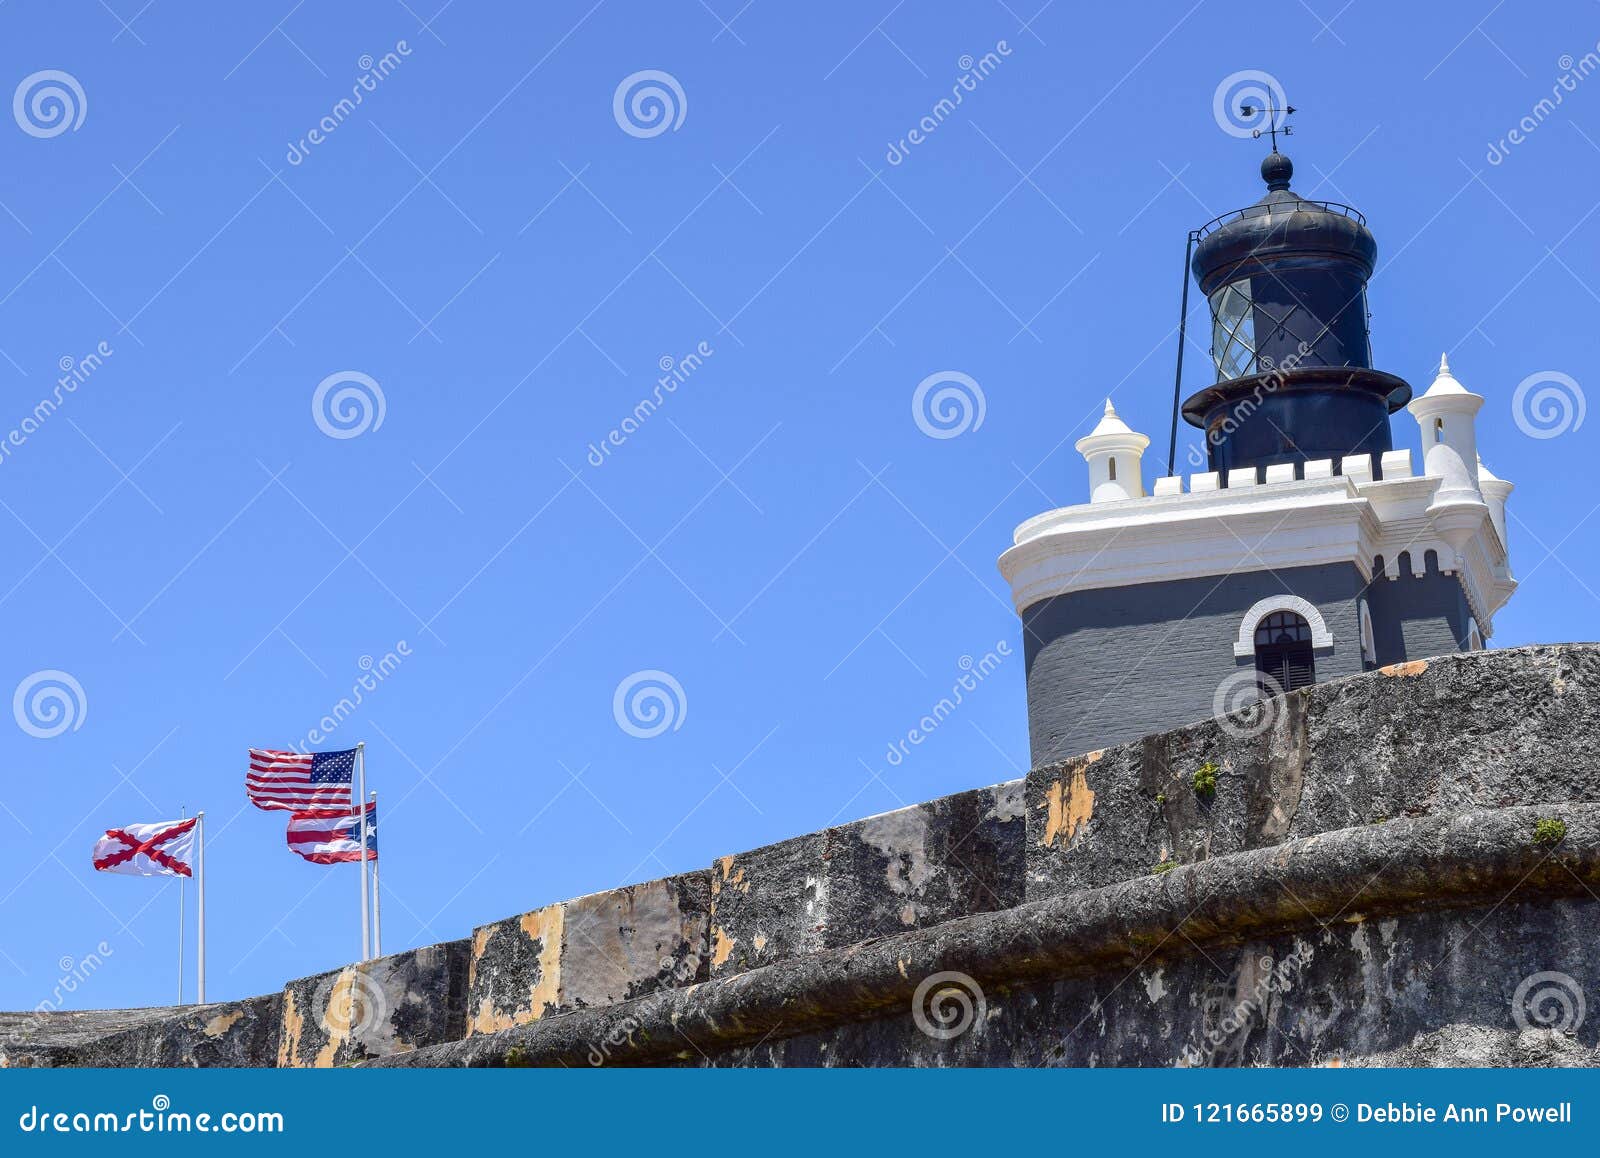 san juan, puerto rico - april 02 2014: lighthouse of the castillo san felipe del morro